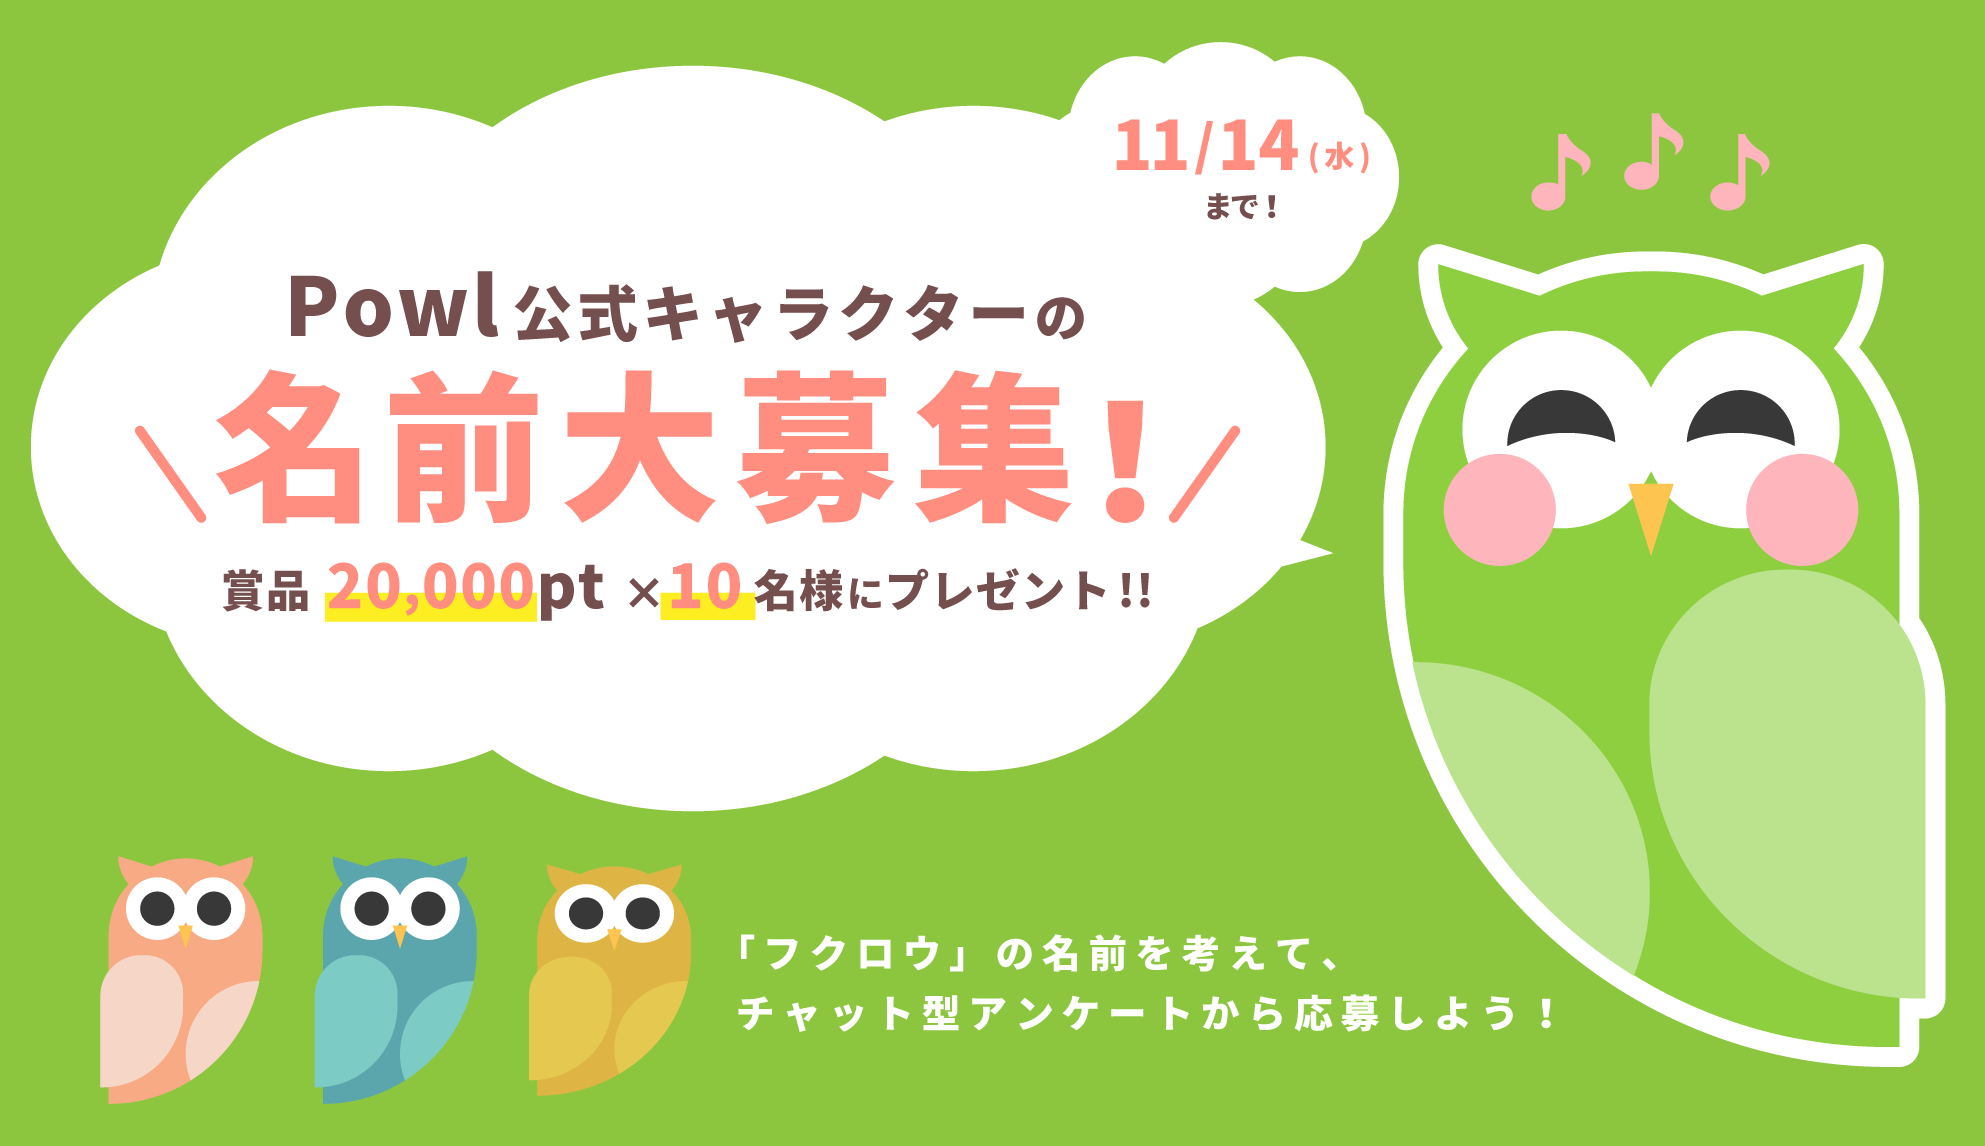 Powl公式キャラクター公募キャンペーン